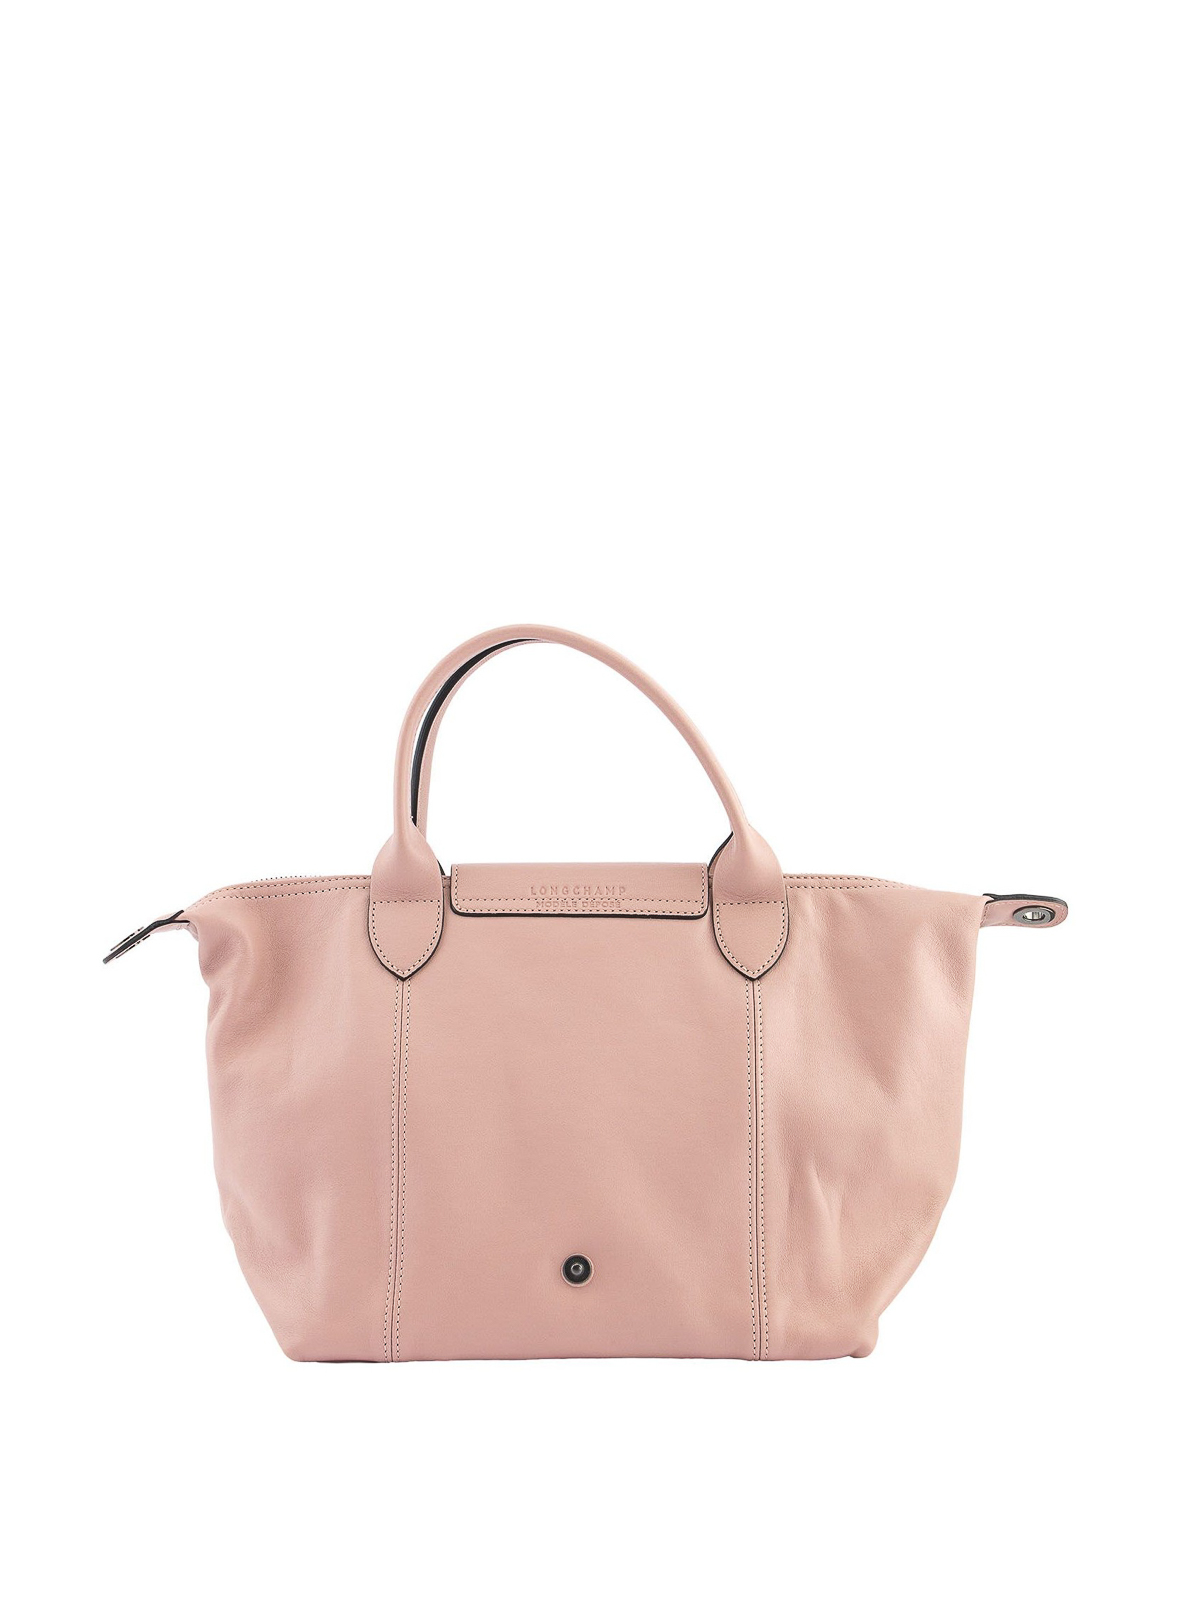 Longchamp Le Pliage Cuir Top Handle Bag in Pink